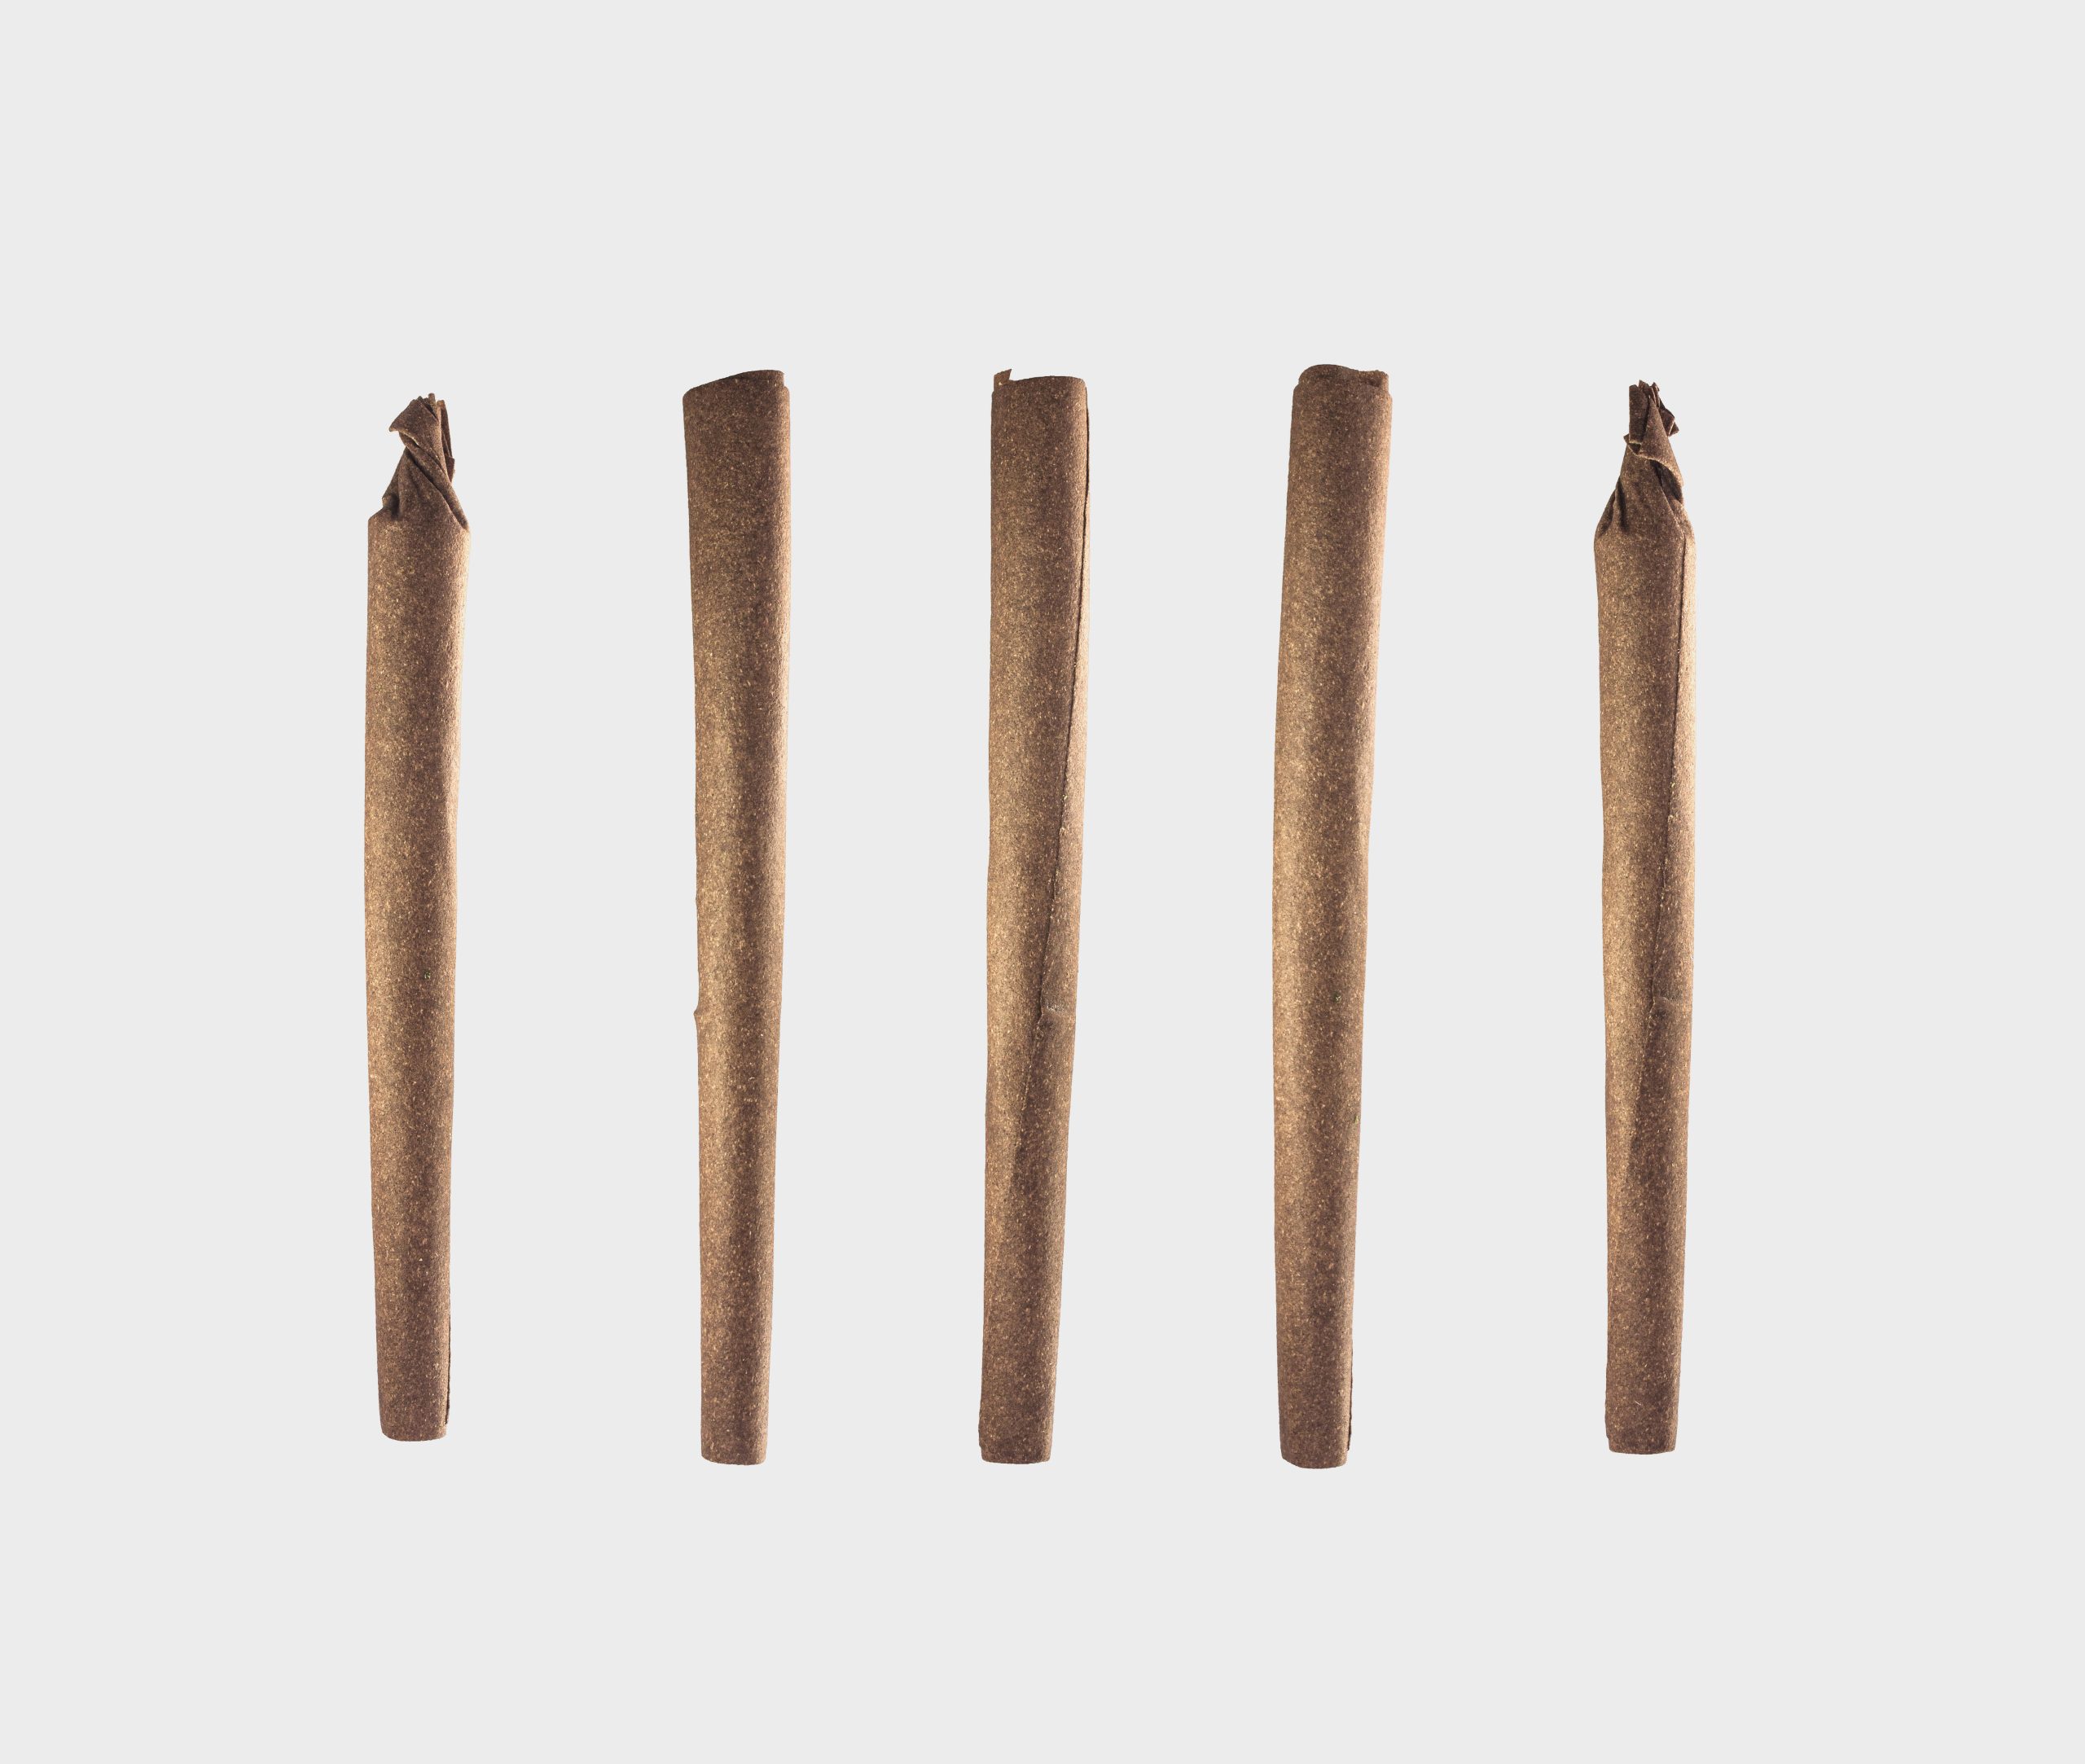 Set of Large Pre-Rolled Marijuana Cigars - Blunts - Isolated